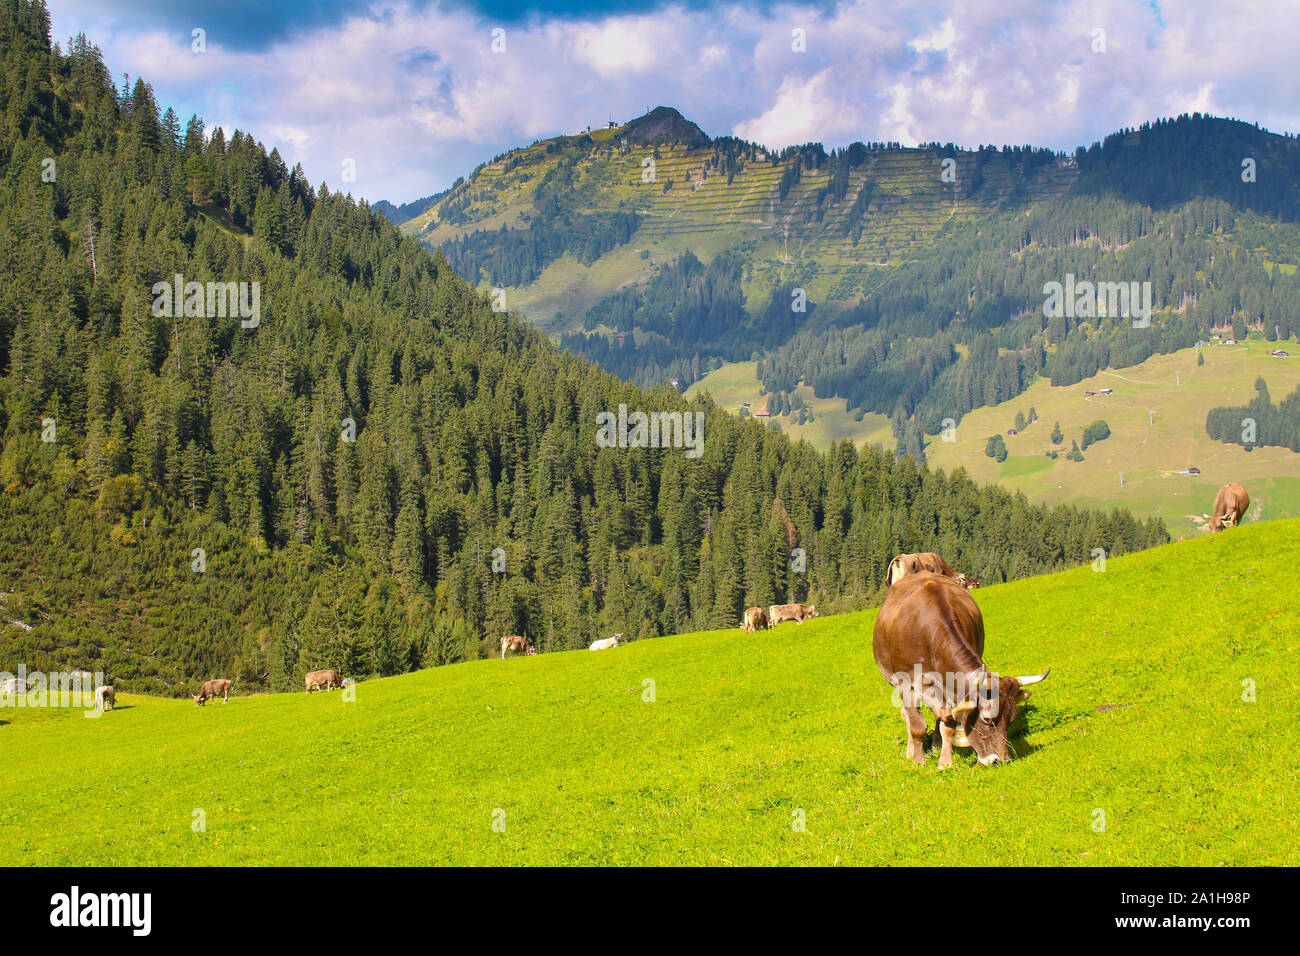 The alps in the Kleinwalsertal area in Austria Stock Photo